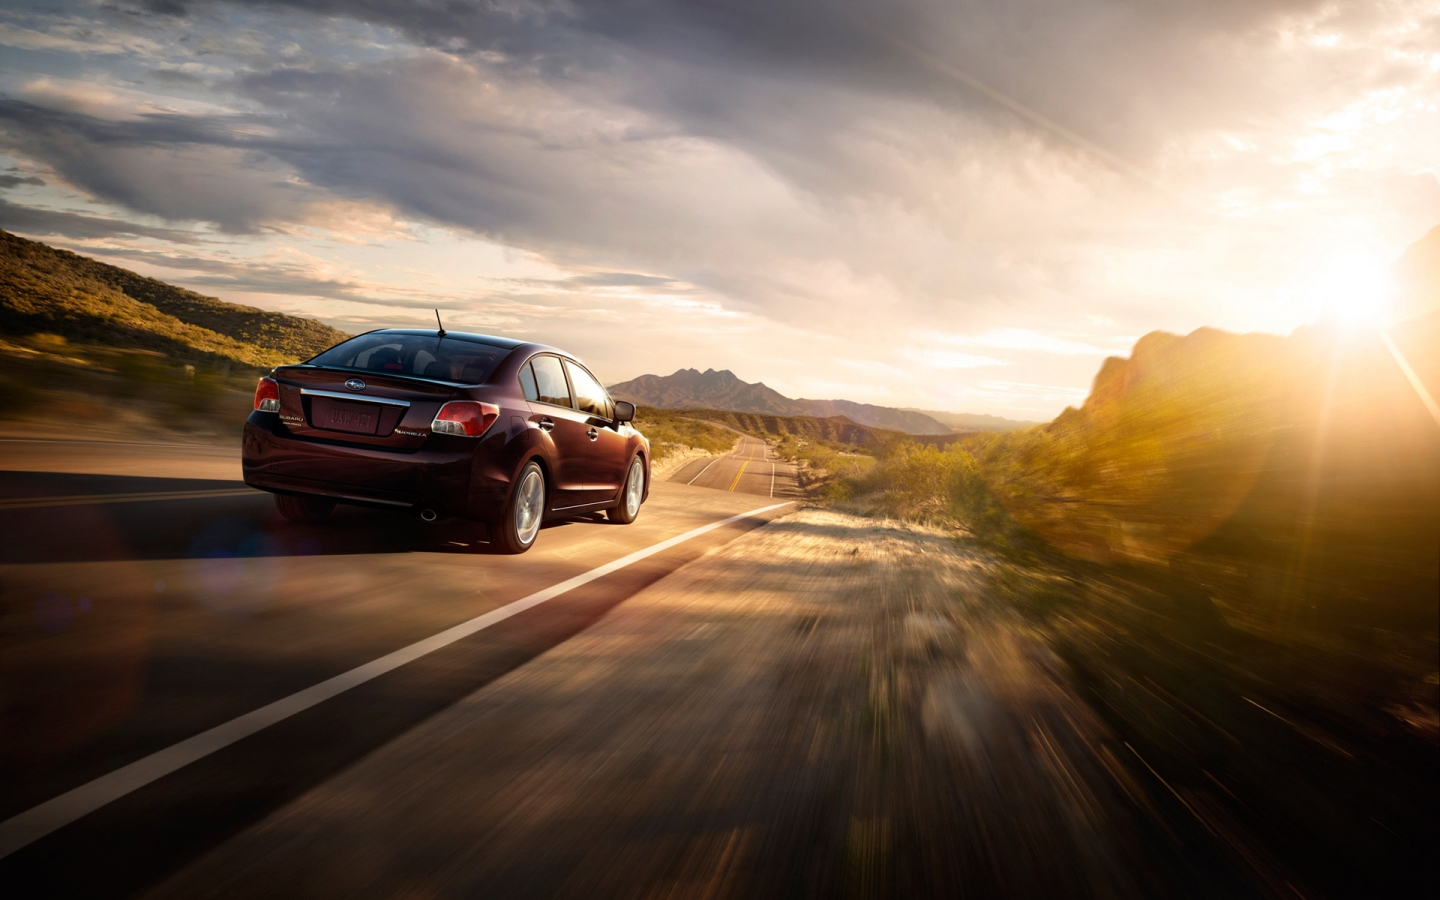 2012 Subaru Impreza Limited for 1440 x 900 widescreen resolution